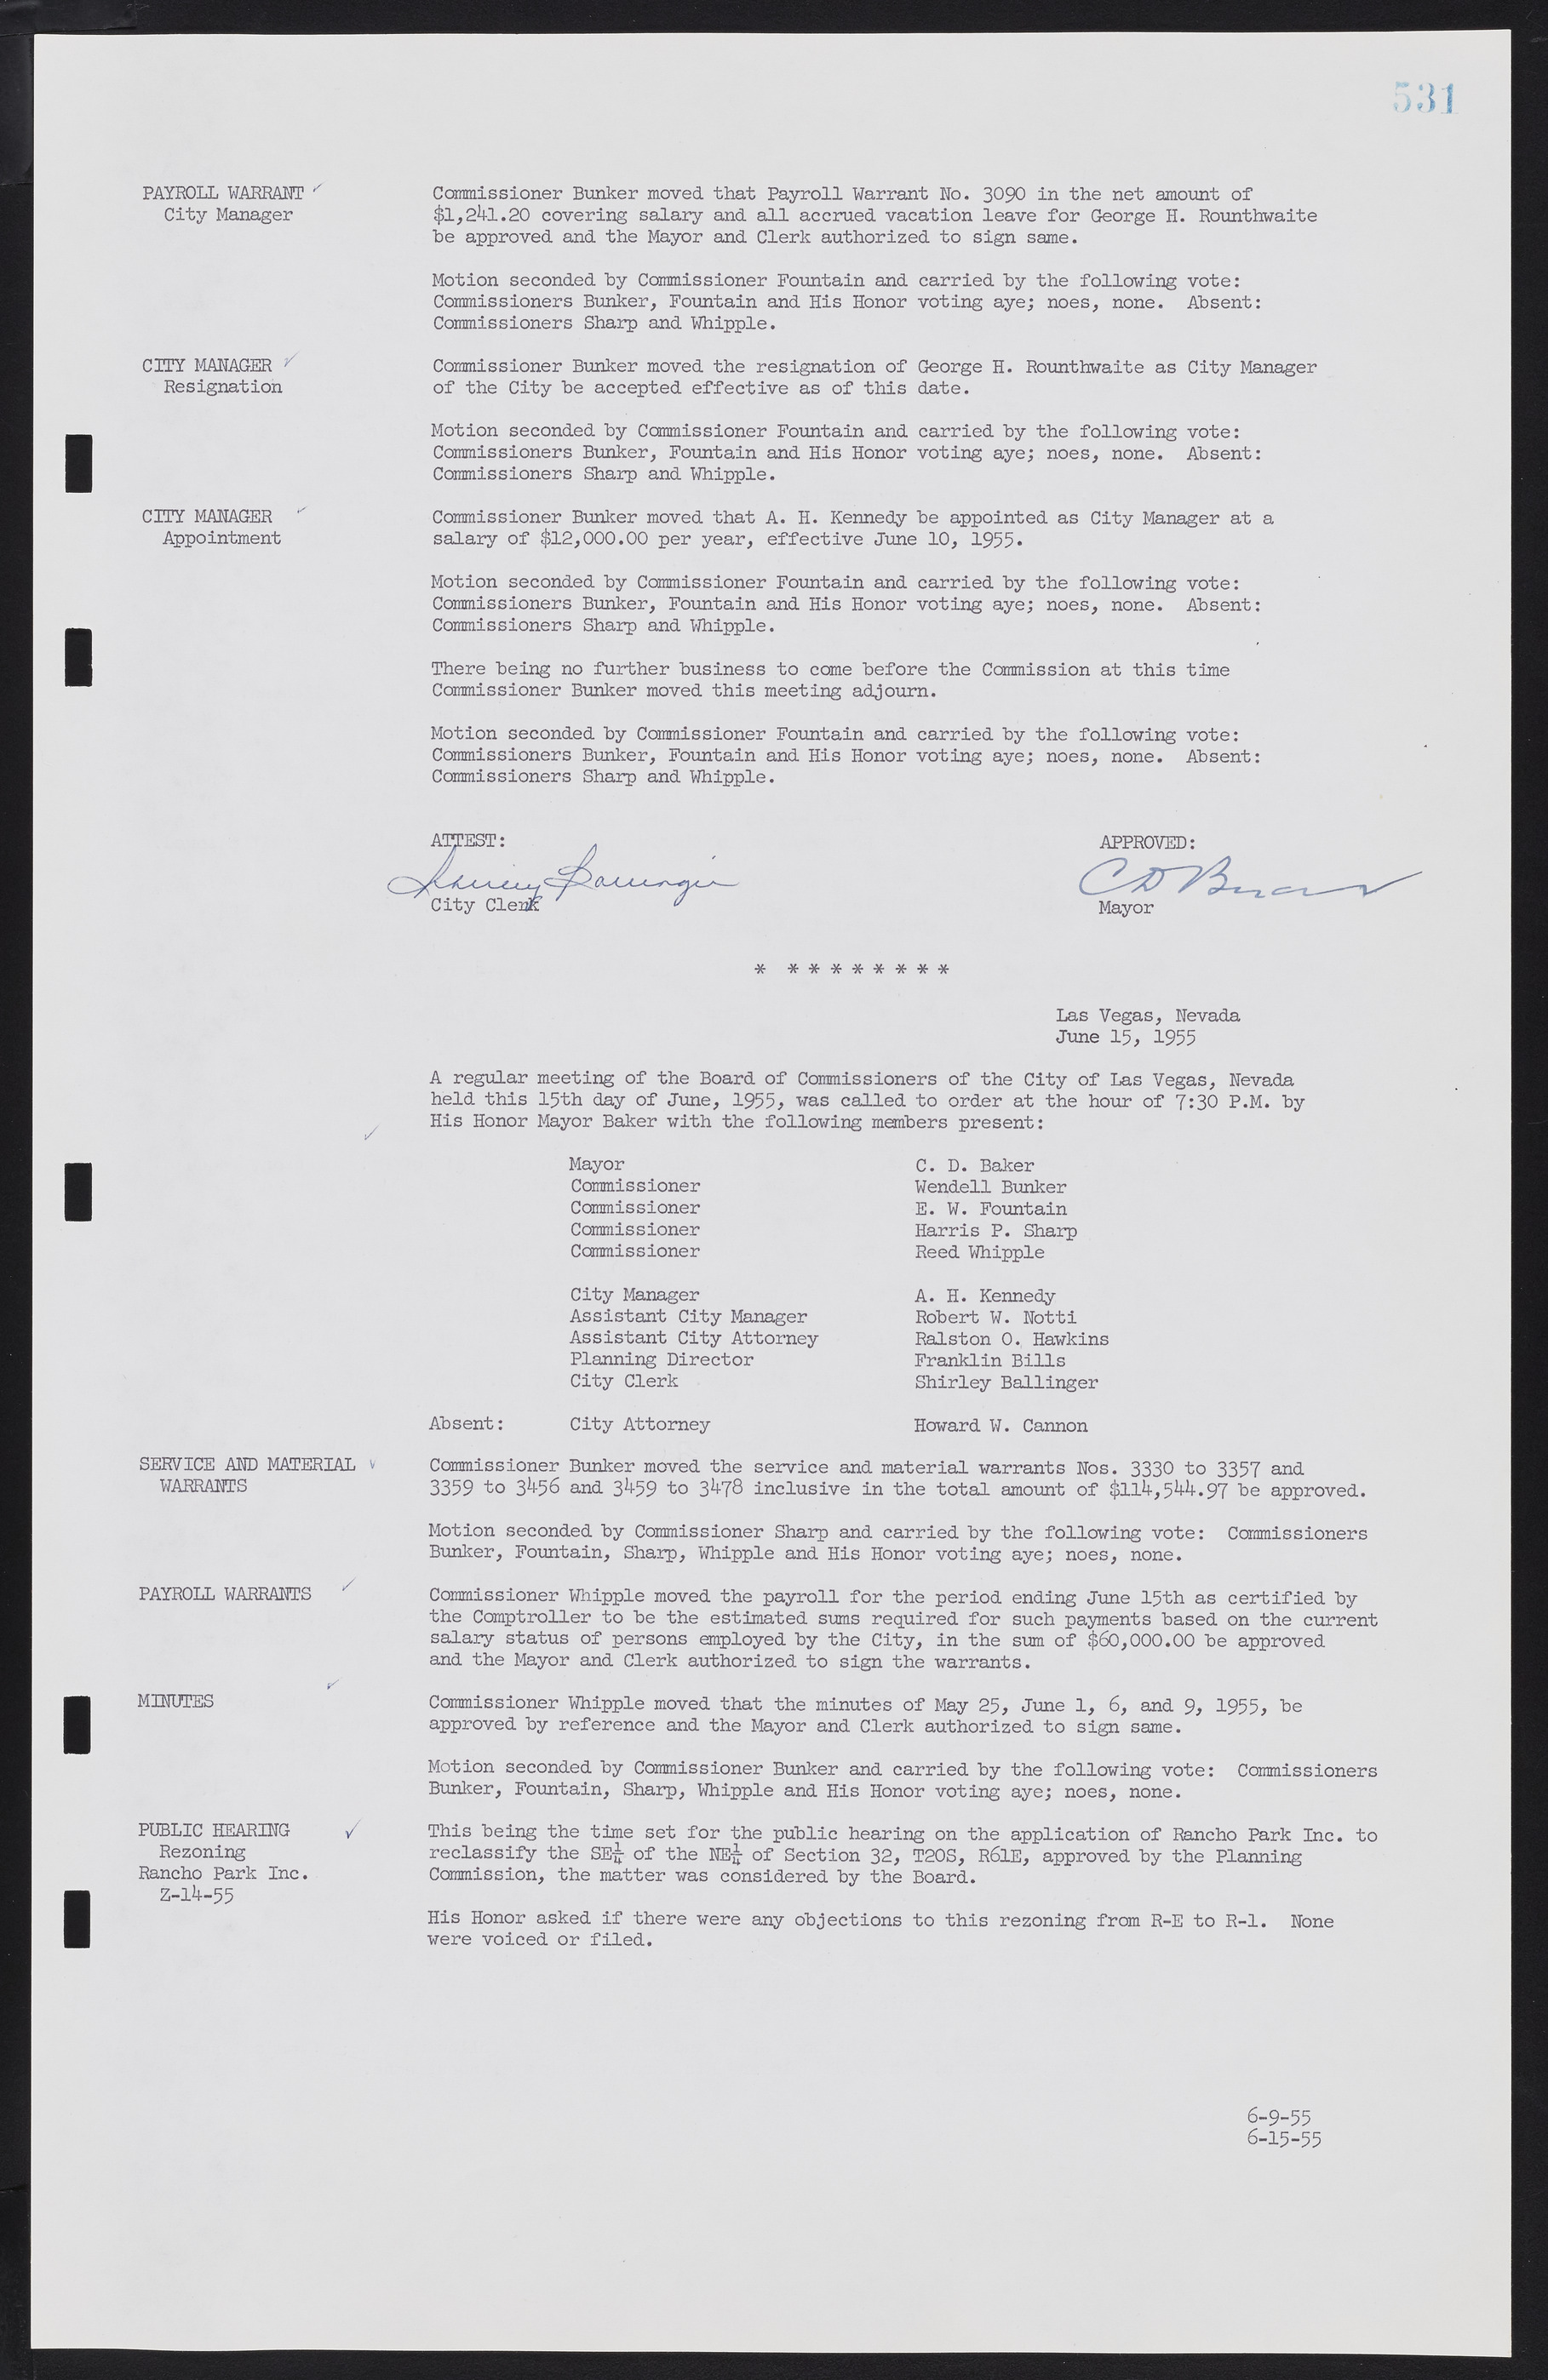 Las Vegas City Commission Minutes, February 17, 1954 to September 21, 1955, lvc000009-537